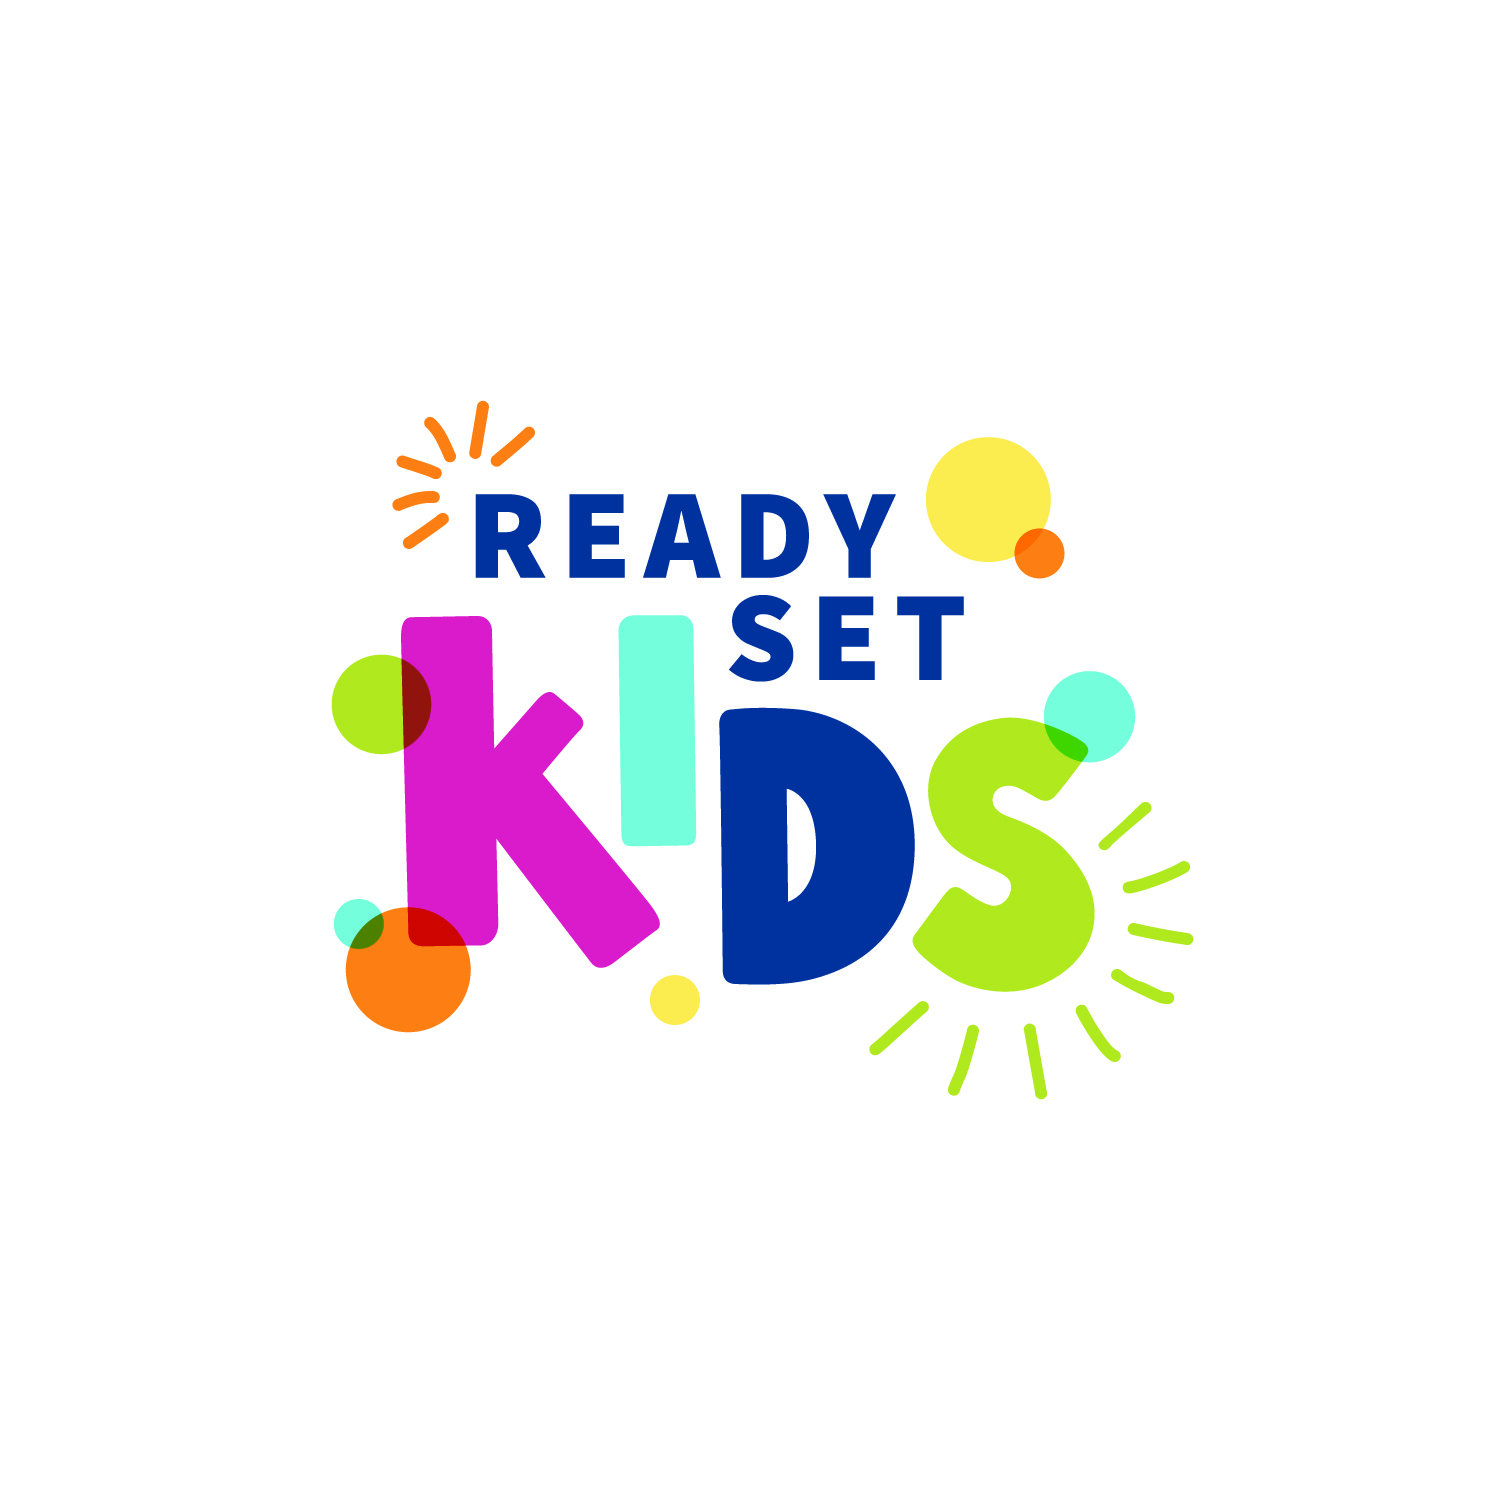 Be Ready Kids